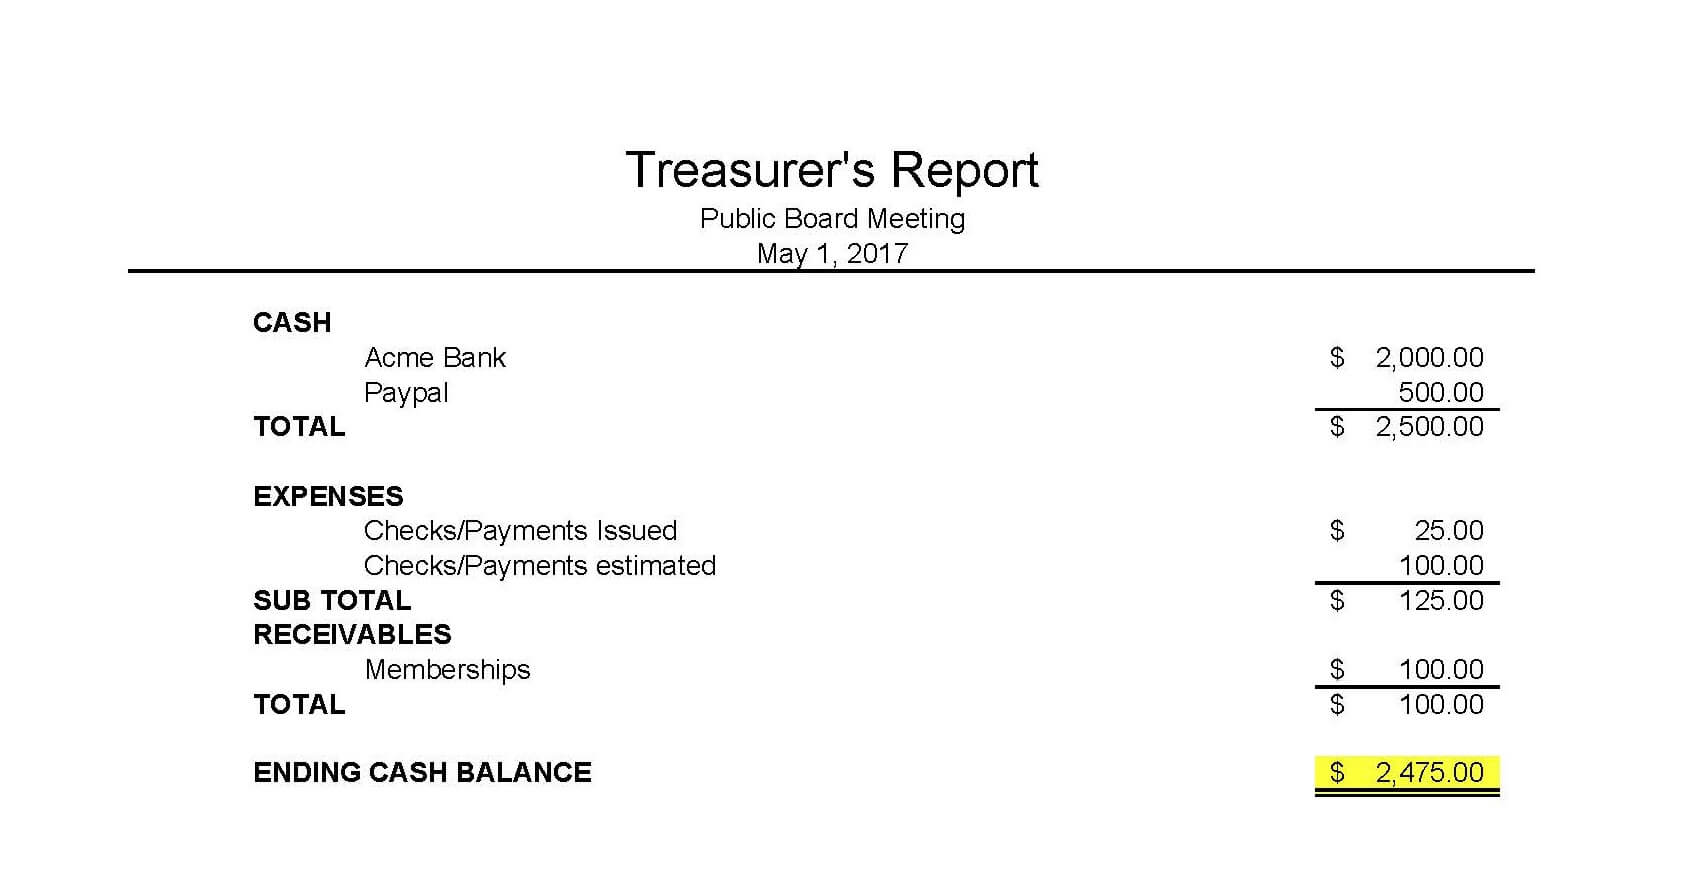 009 Treasurer Report Template Non Profit Sample Club Pertaining To Treasurer Report Template Non Profit